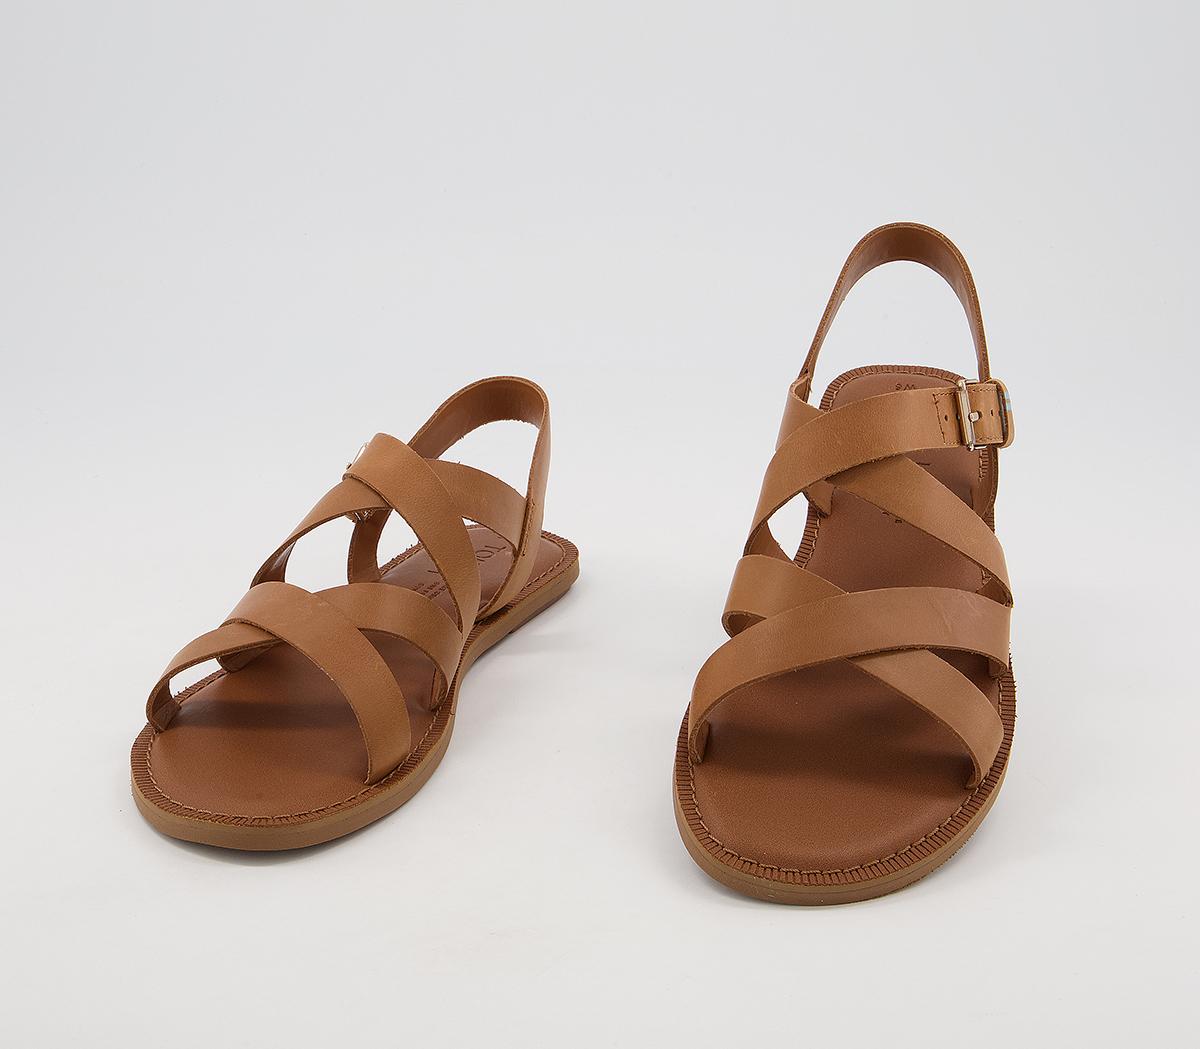 TOMS Sicily Sandals Tan Leather - Women’s Sandals